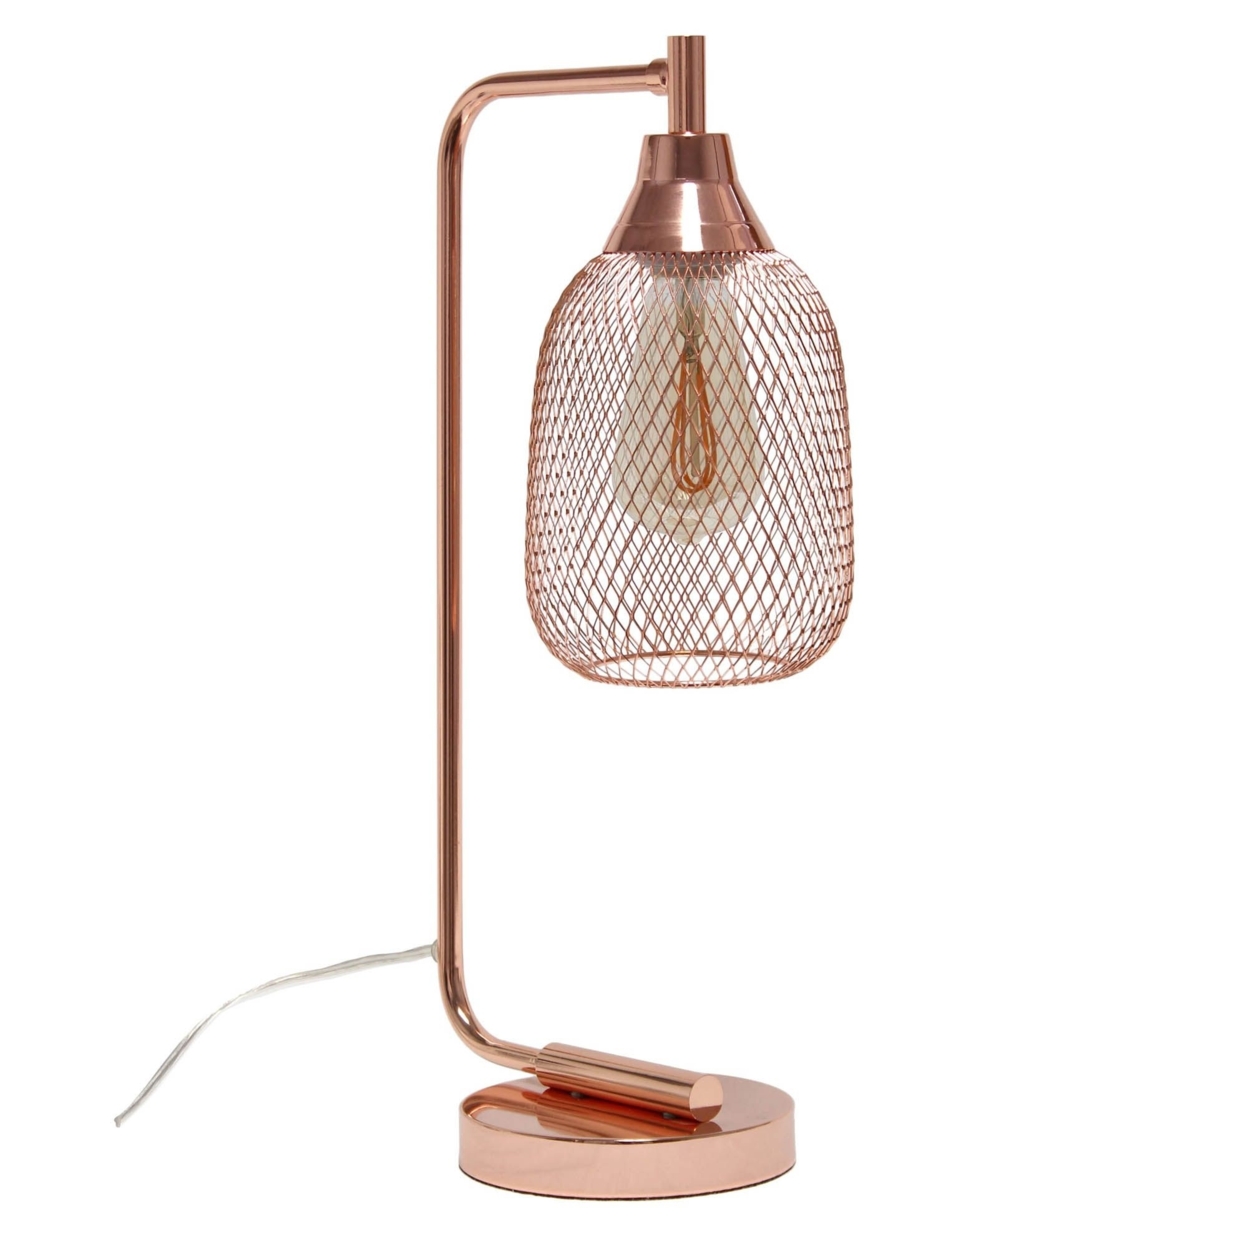 Lalia Home Industrial Mesh Desk Lamp, Rose Gold